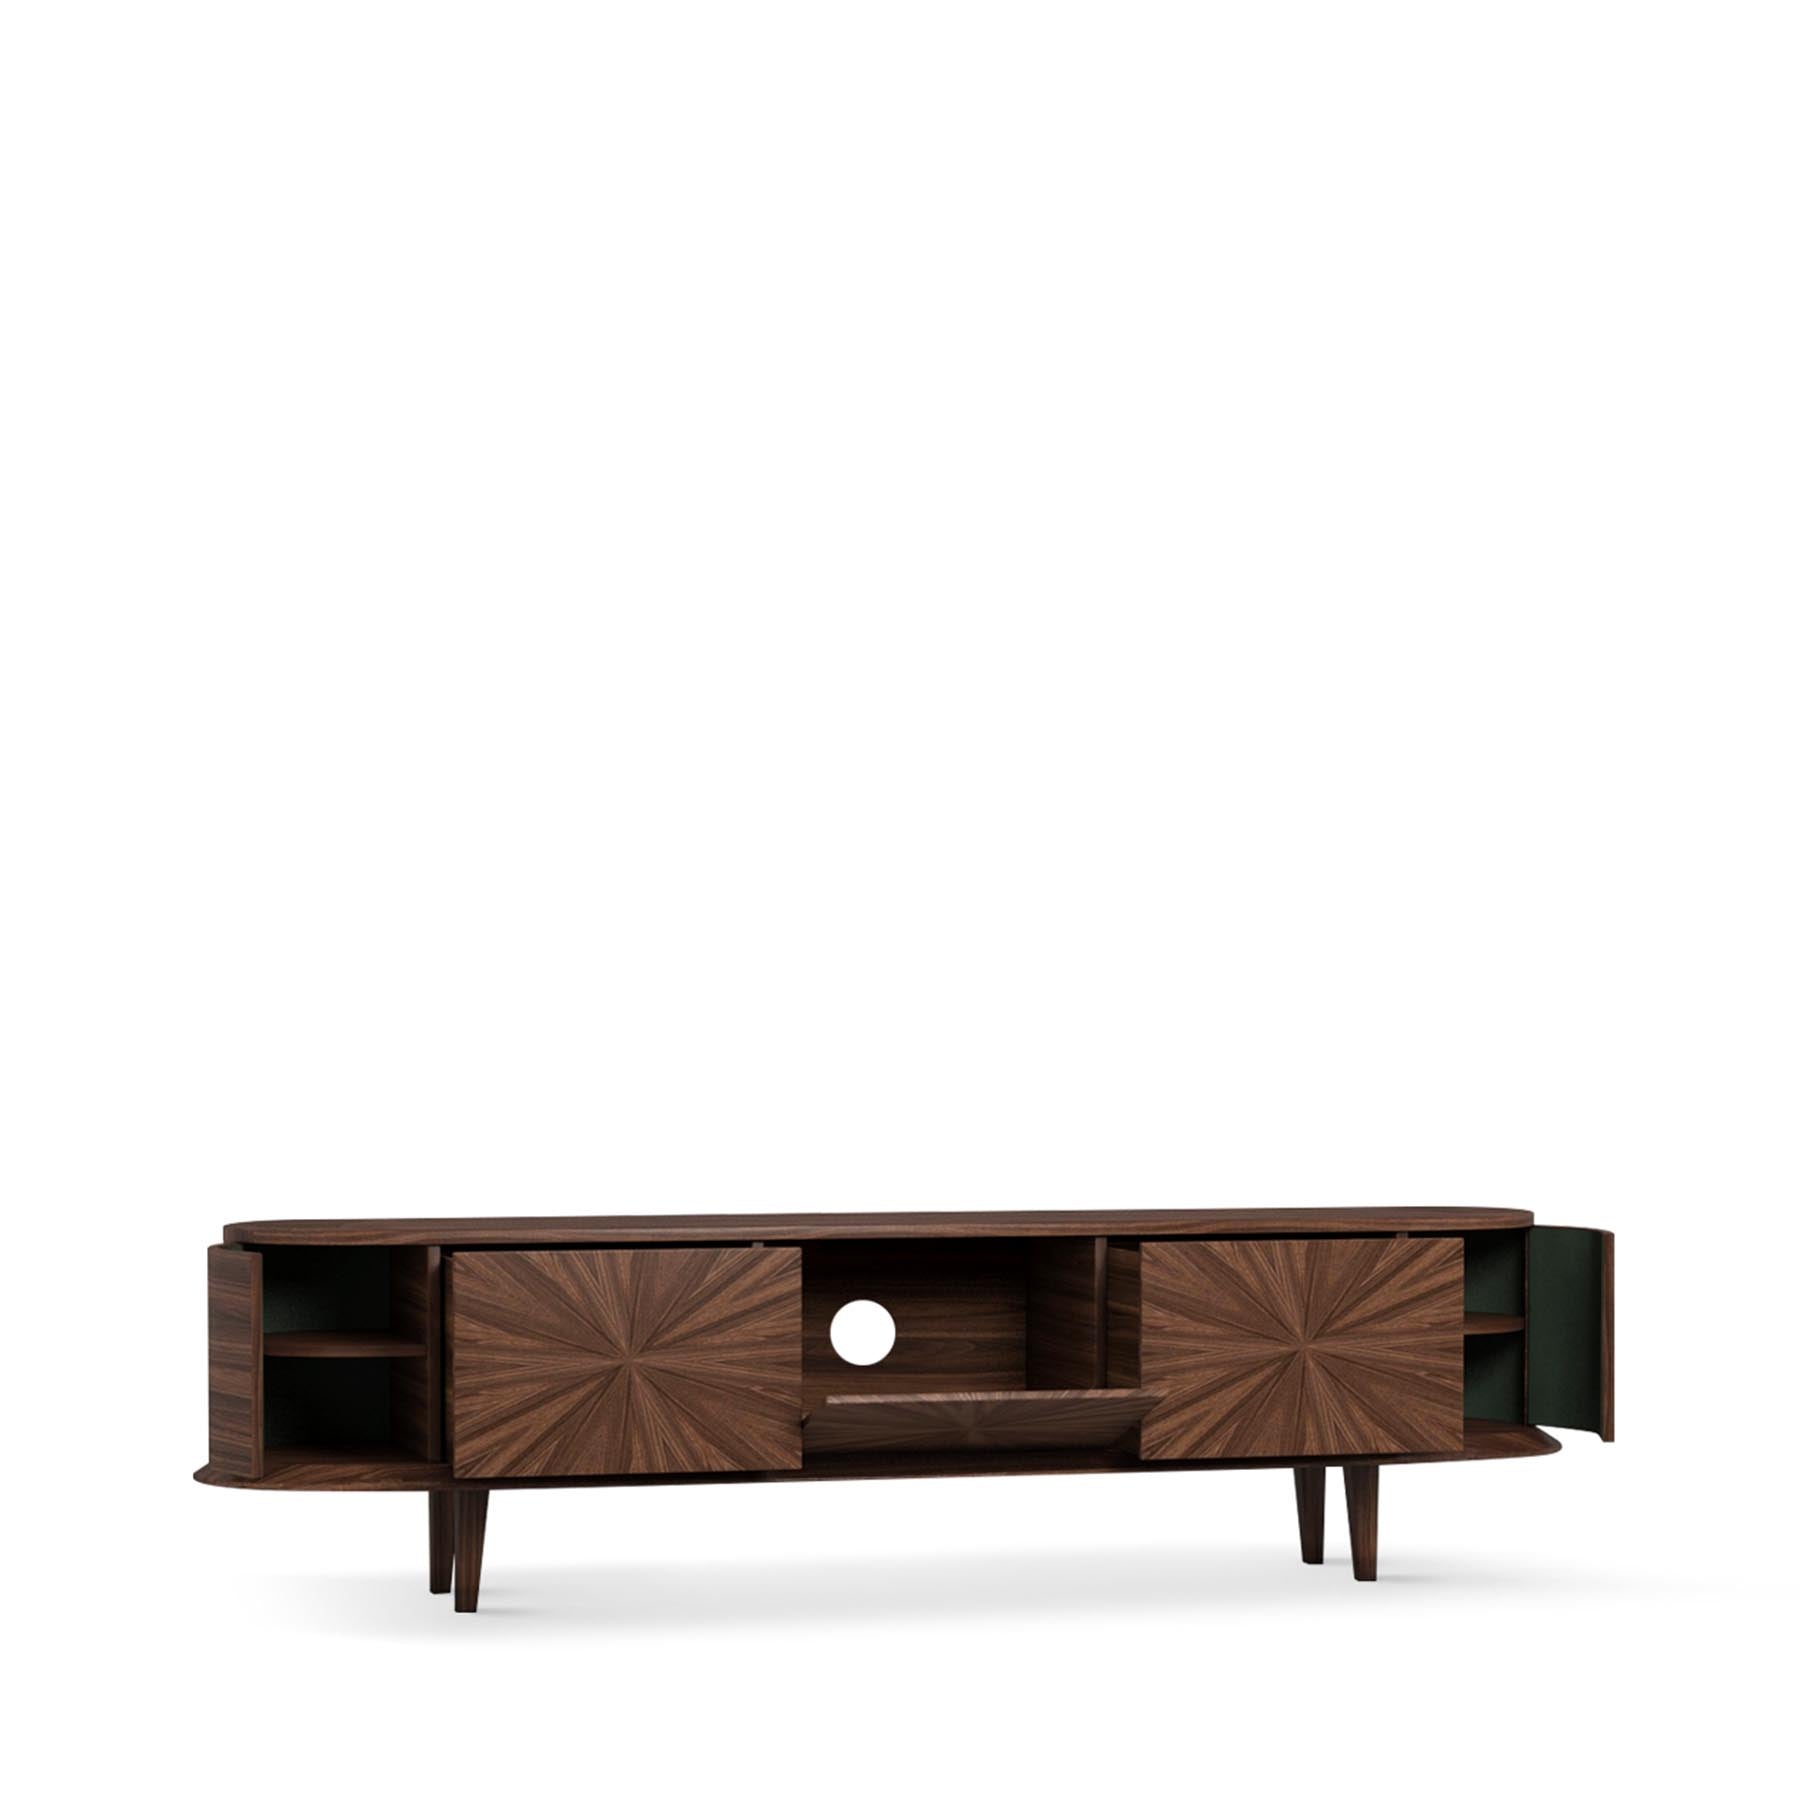 GRANT - SIDEBOARD | Modern Furniture + Decor